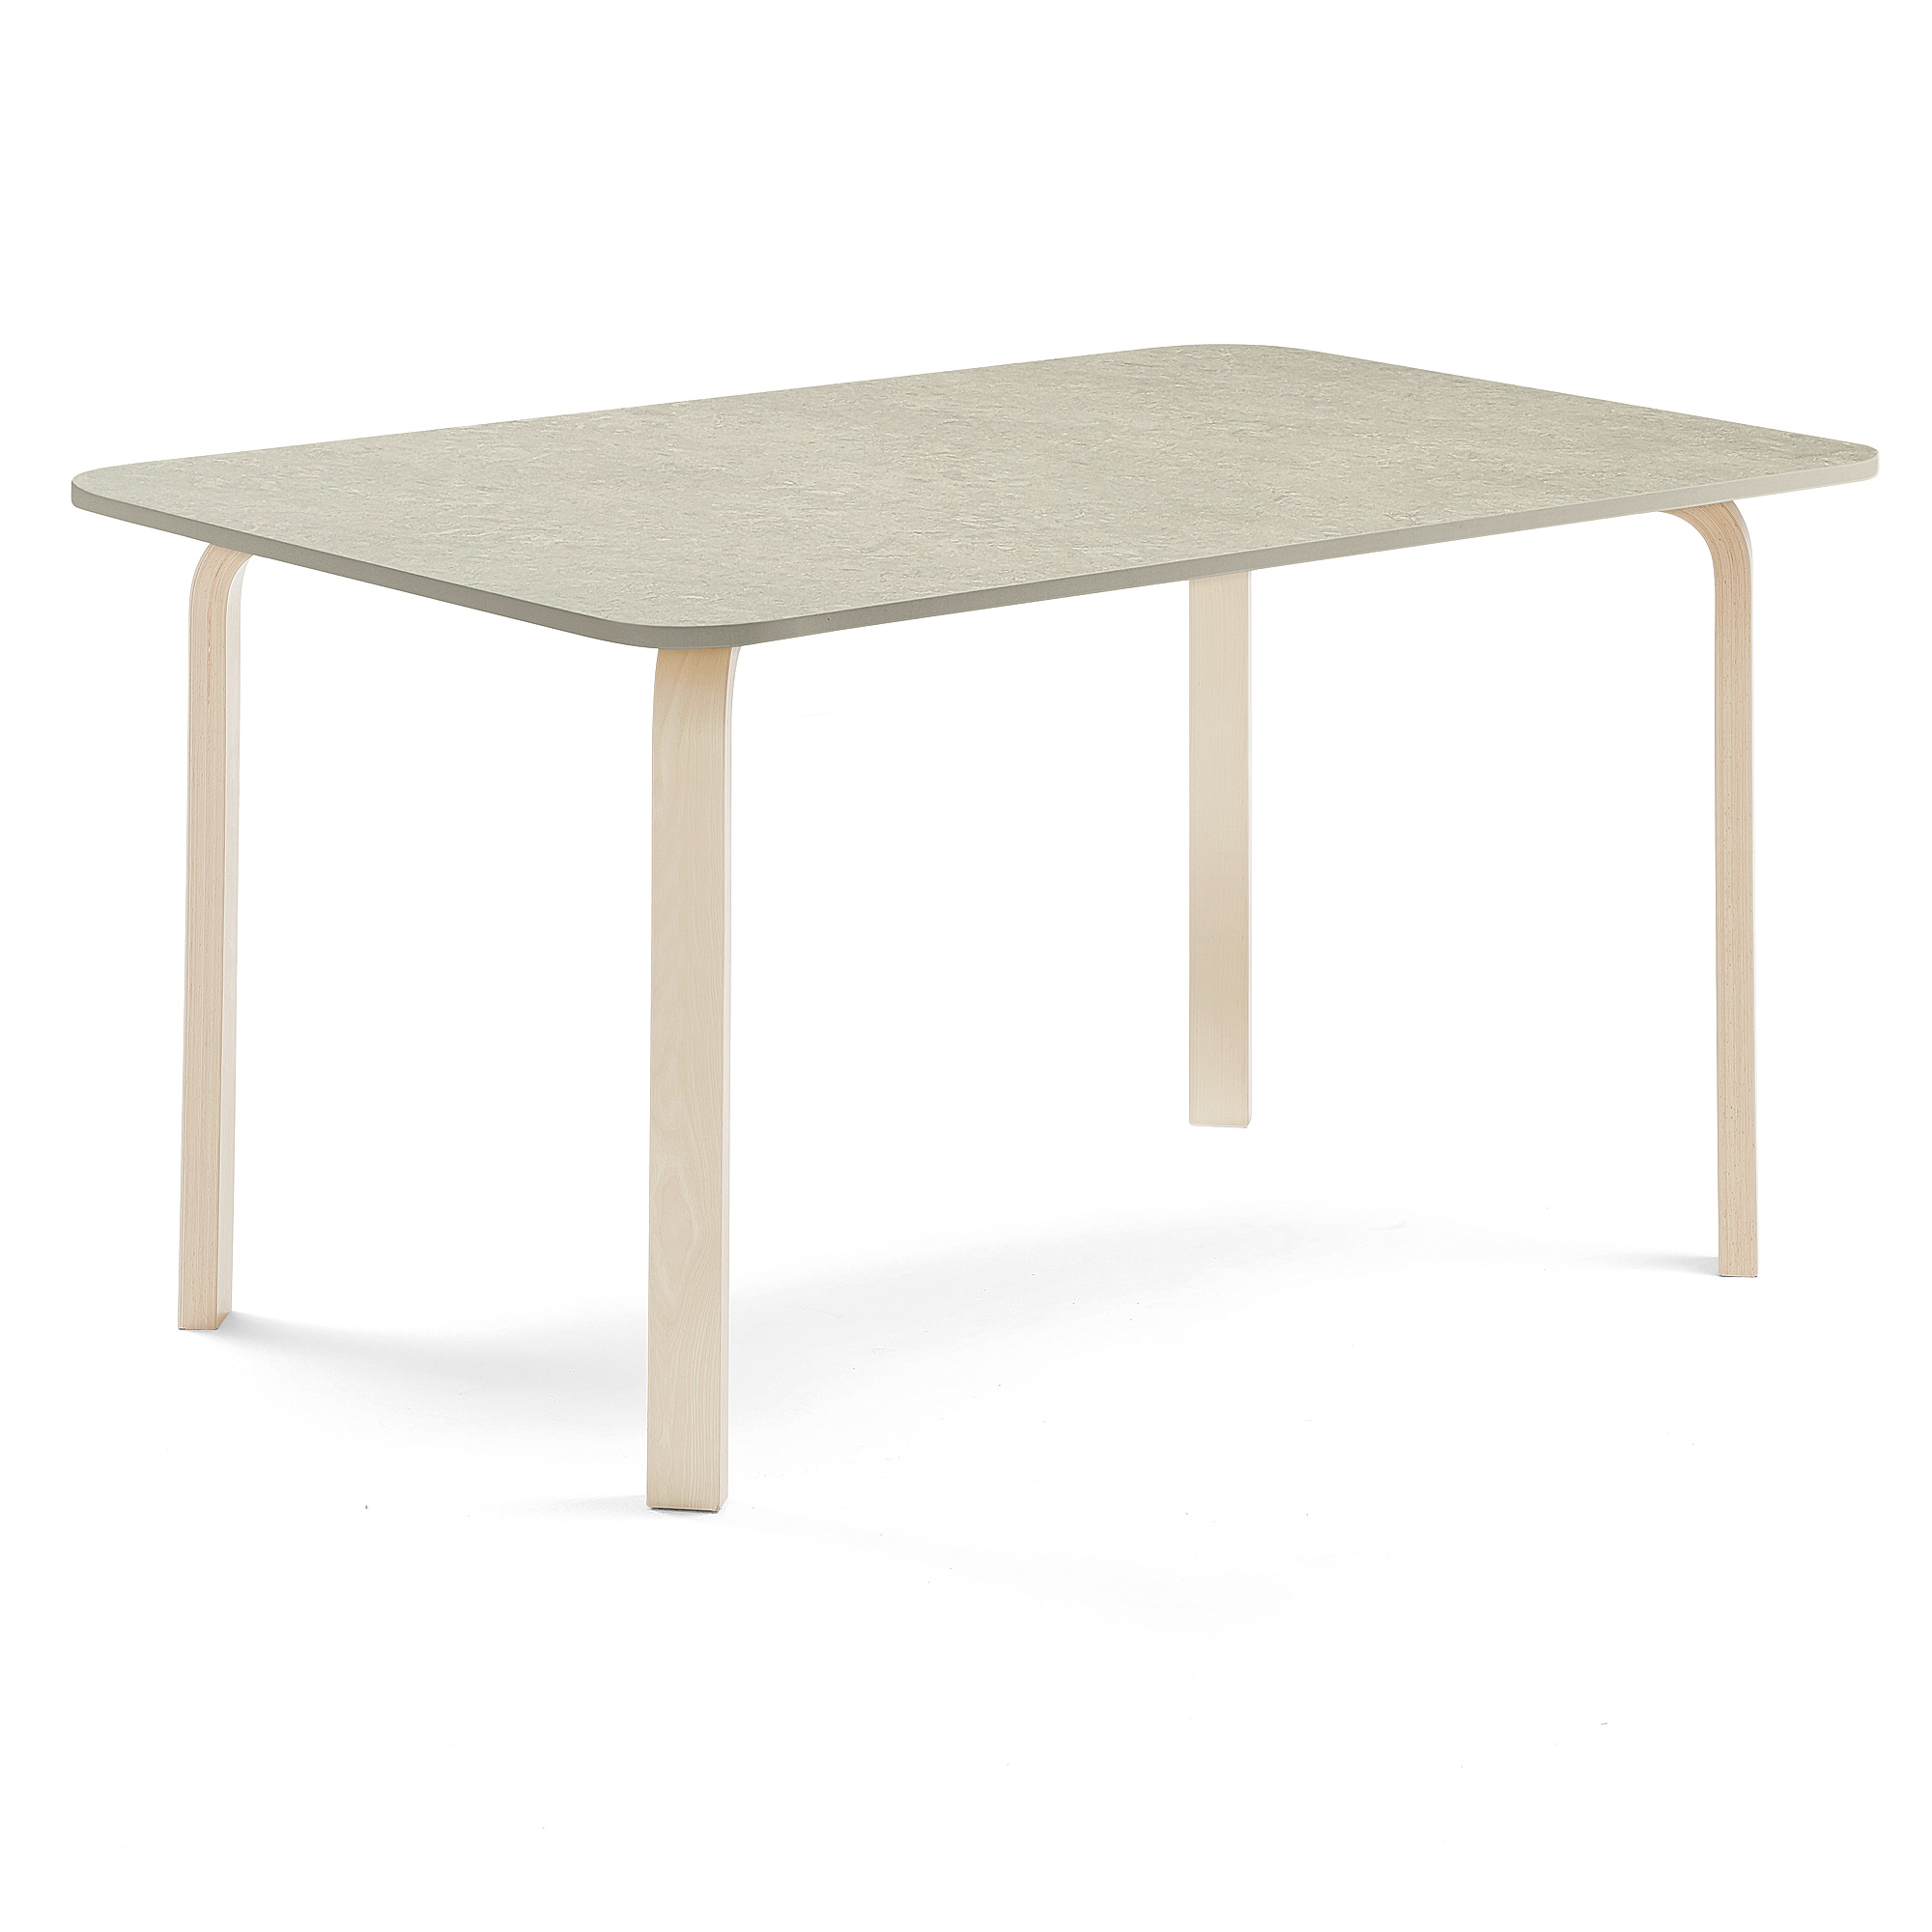 Stůl ELTON, 1800x800x710 mm, bříza, akustické linoleum, šedá